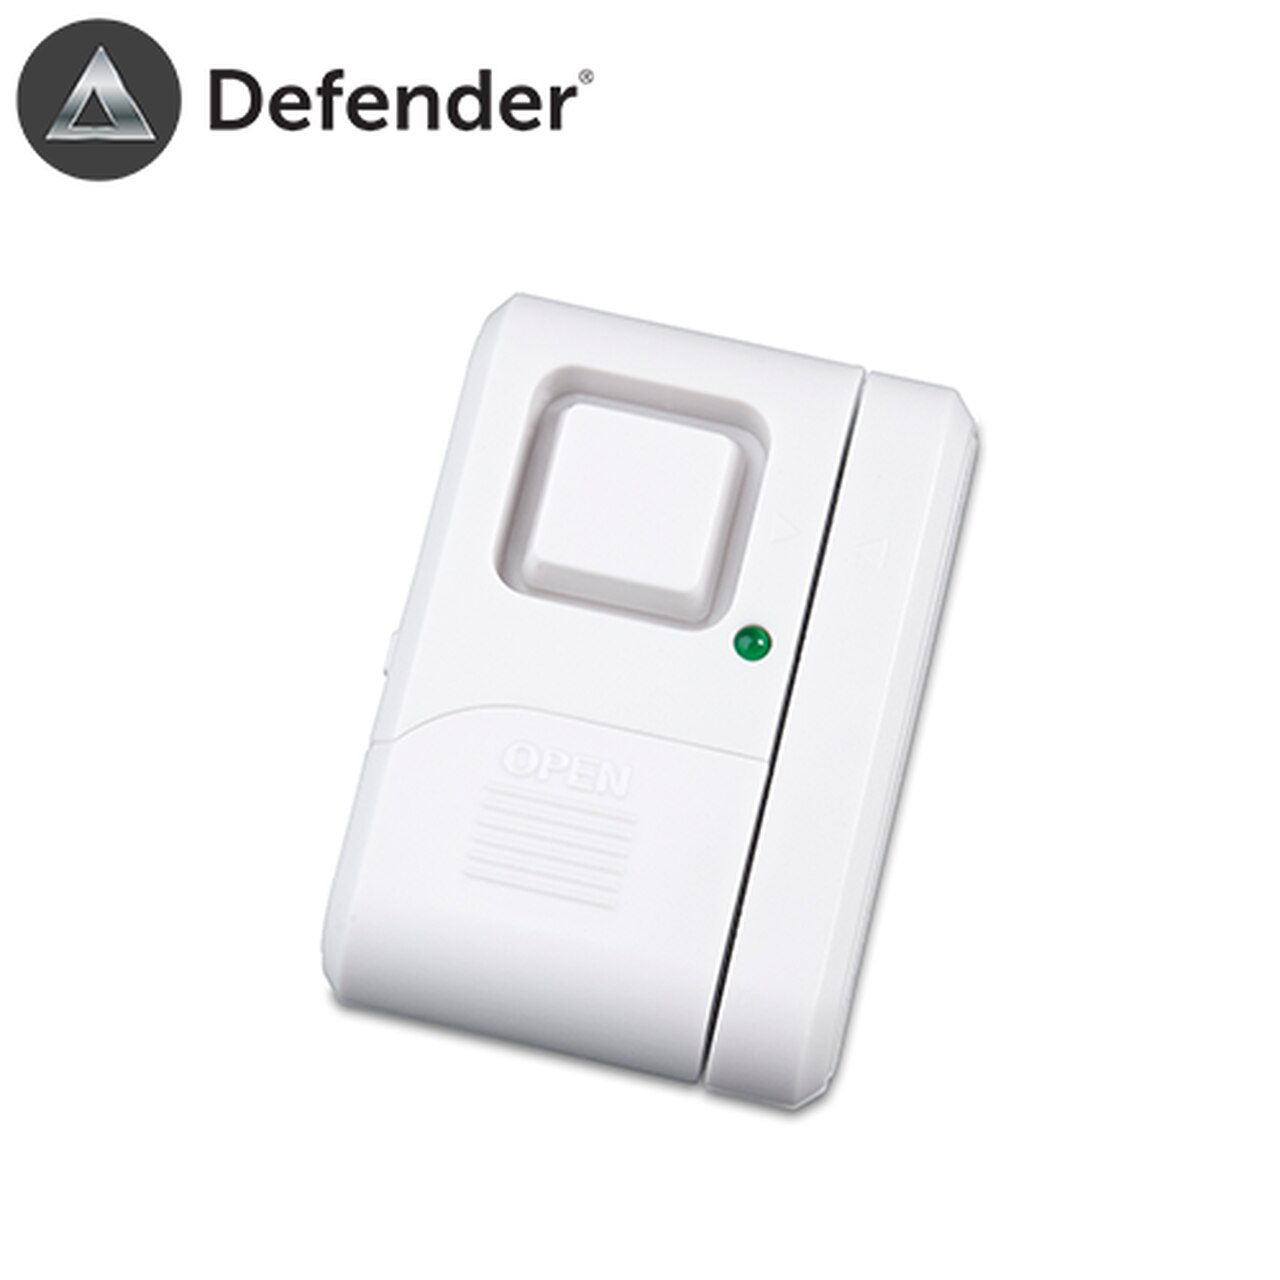 defender chime and alarm for windows and doors security chime alarm 120bd loud shop door window entry visitor intruder alarm deter intruders